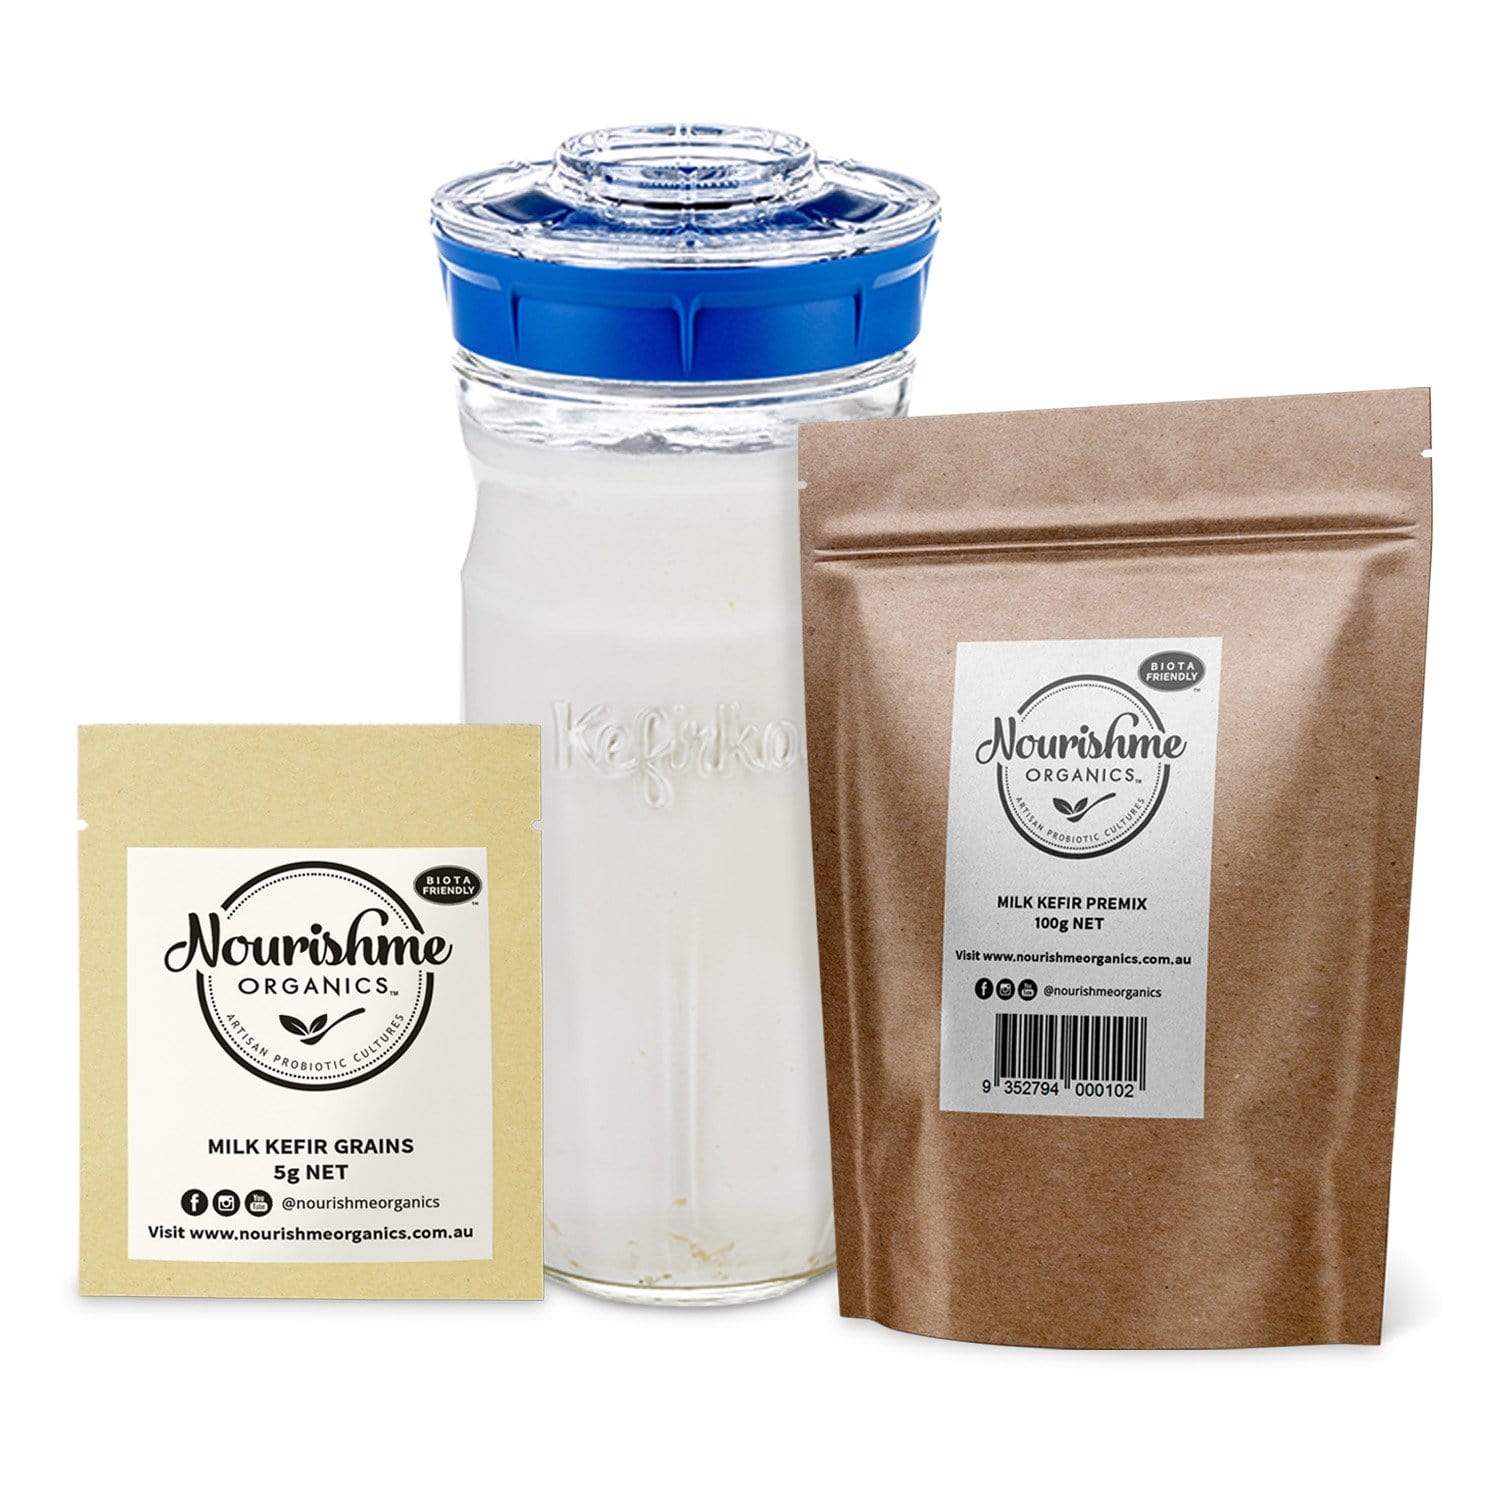 KEFIRKO - All-in-one fermentation jars for homemade probiotics.